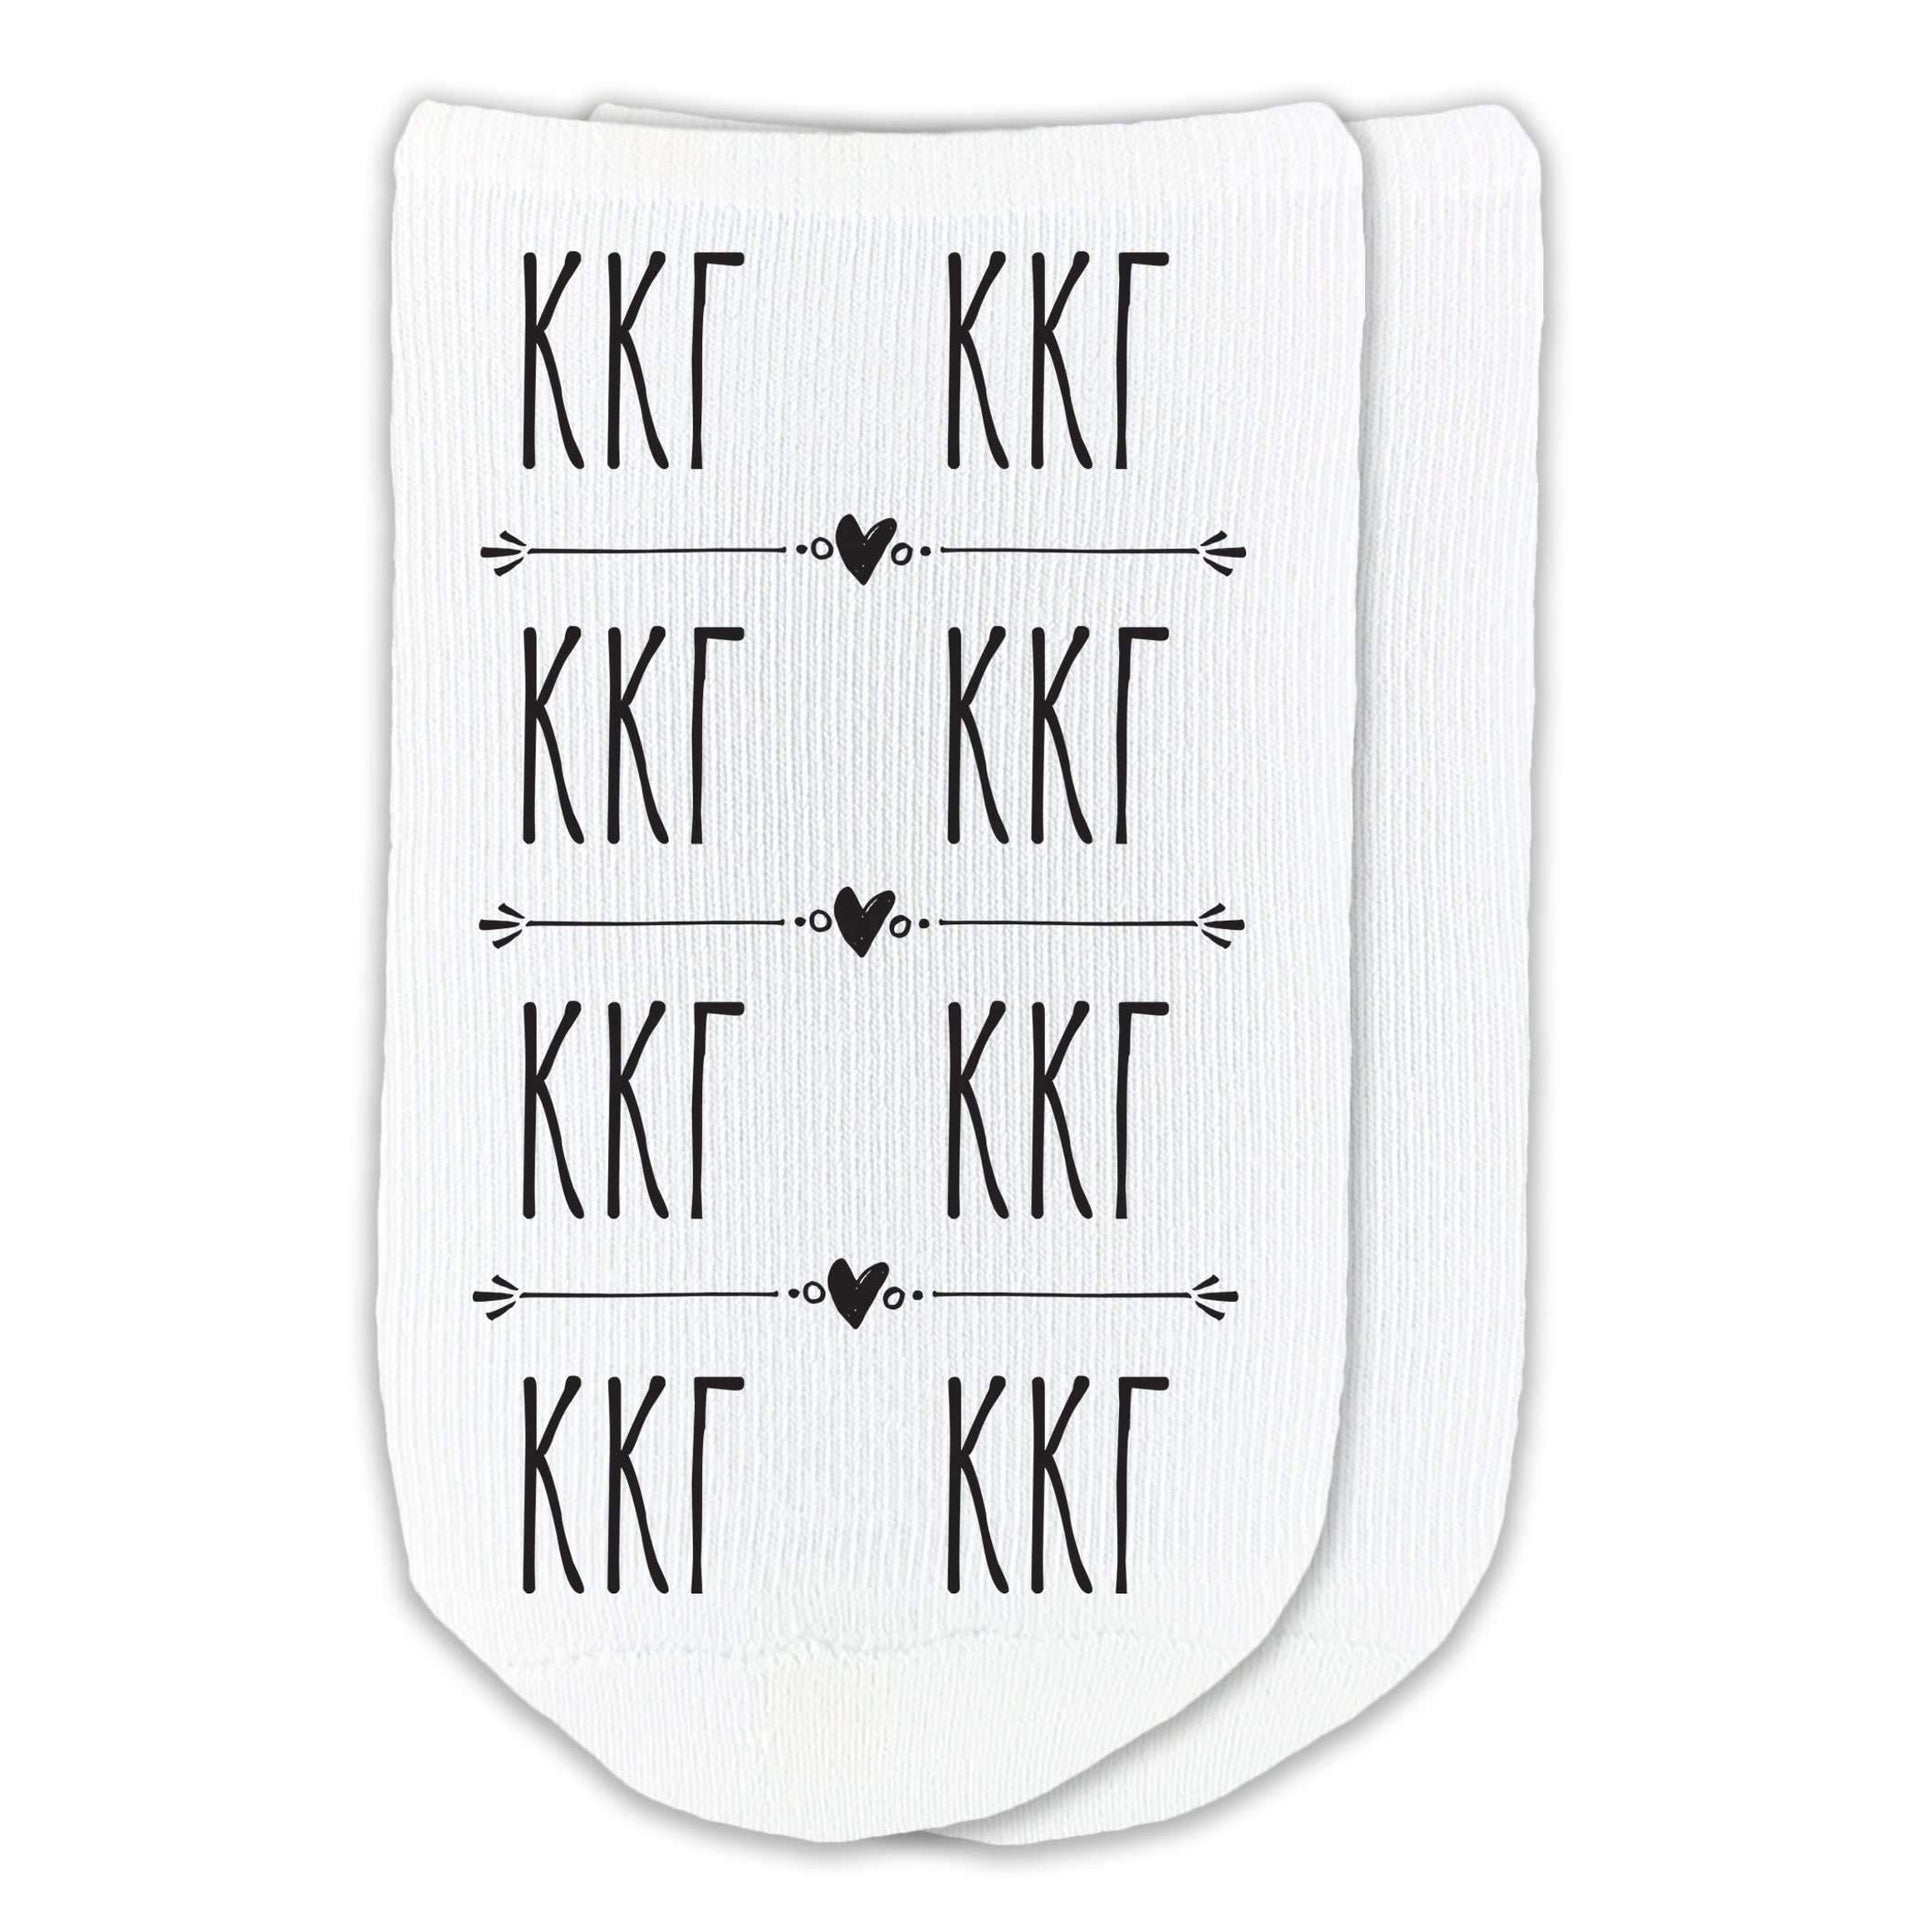 Kappa Kappa Gamma sorority letters in repeating boho design custom printed on white cotton no show socks